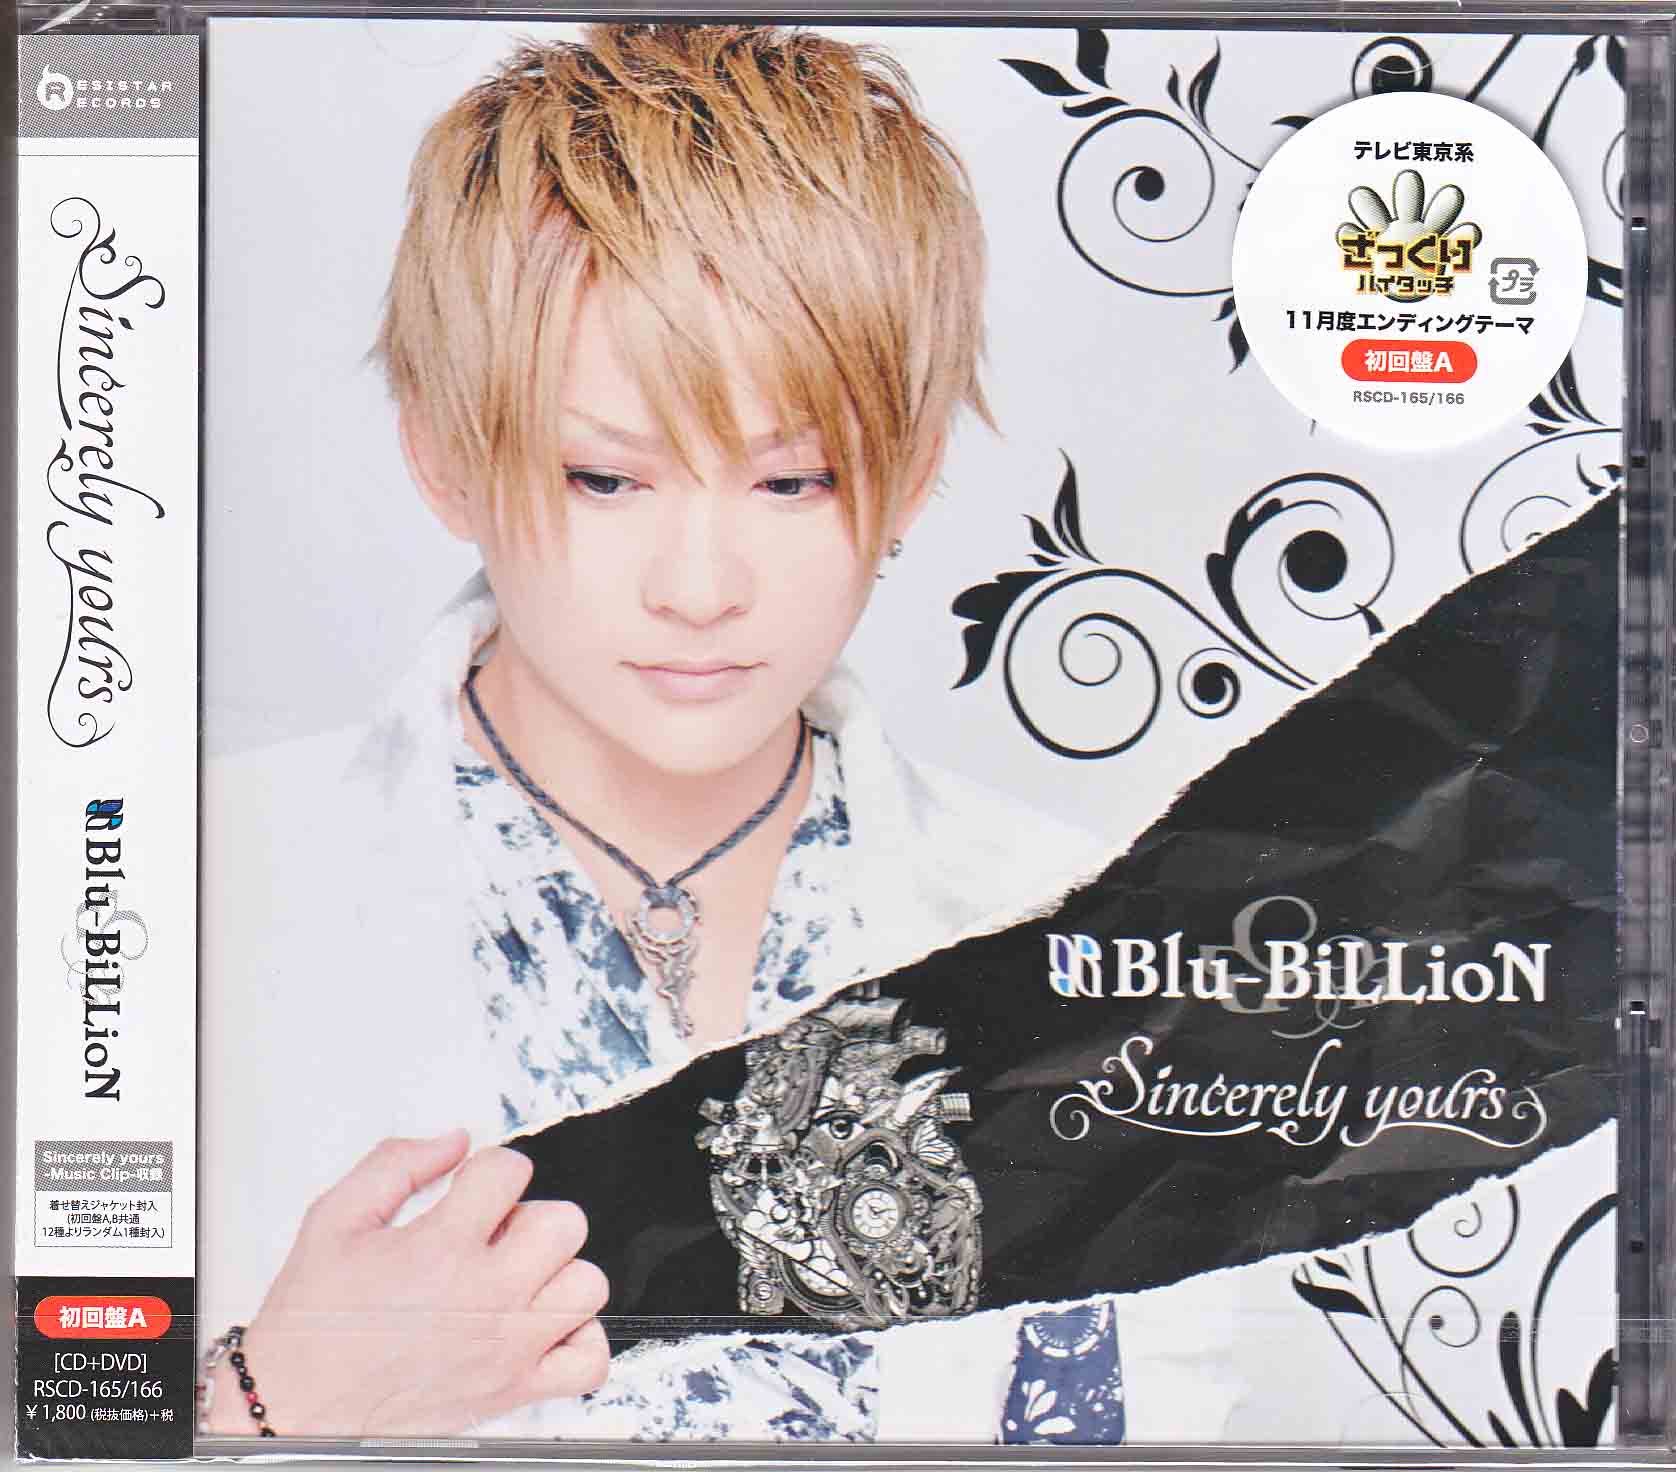 Blu-BiLLioN ( ブルービリオン )  の CD 【初回盤A】Sincerely yours